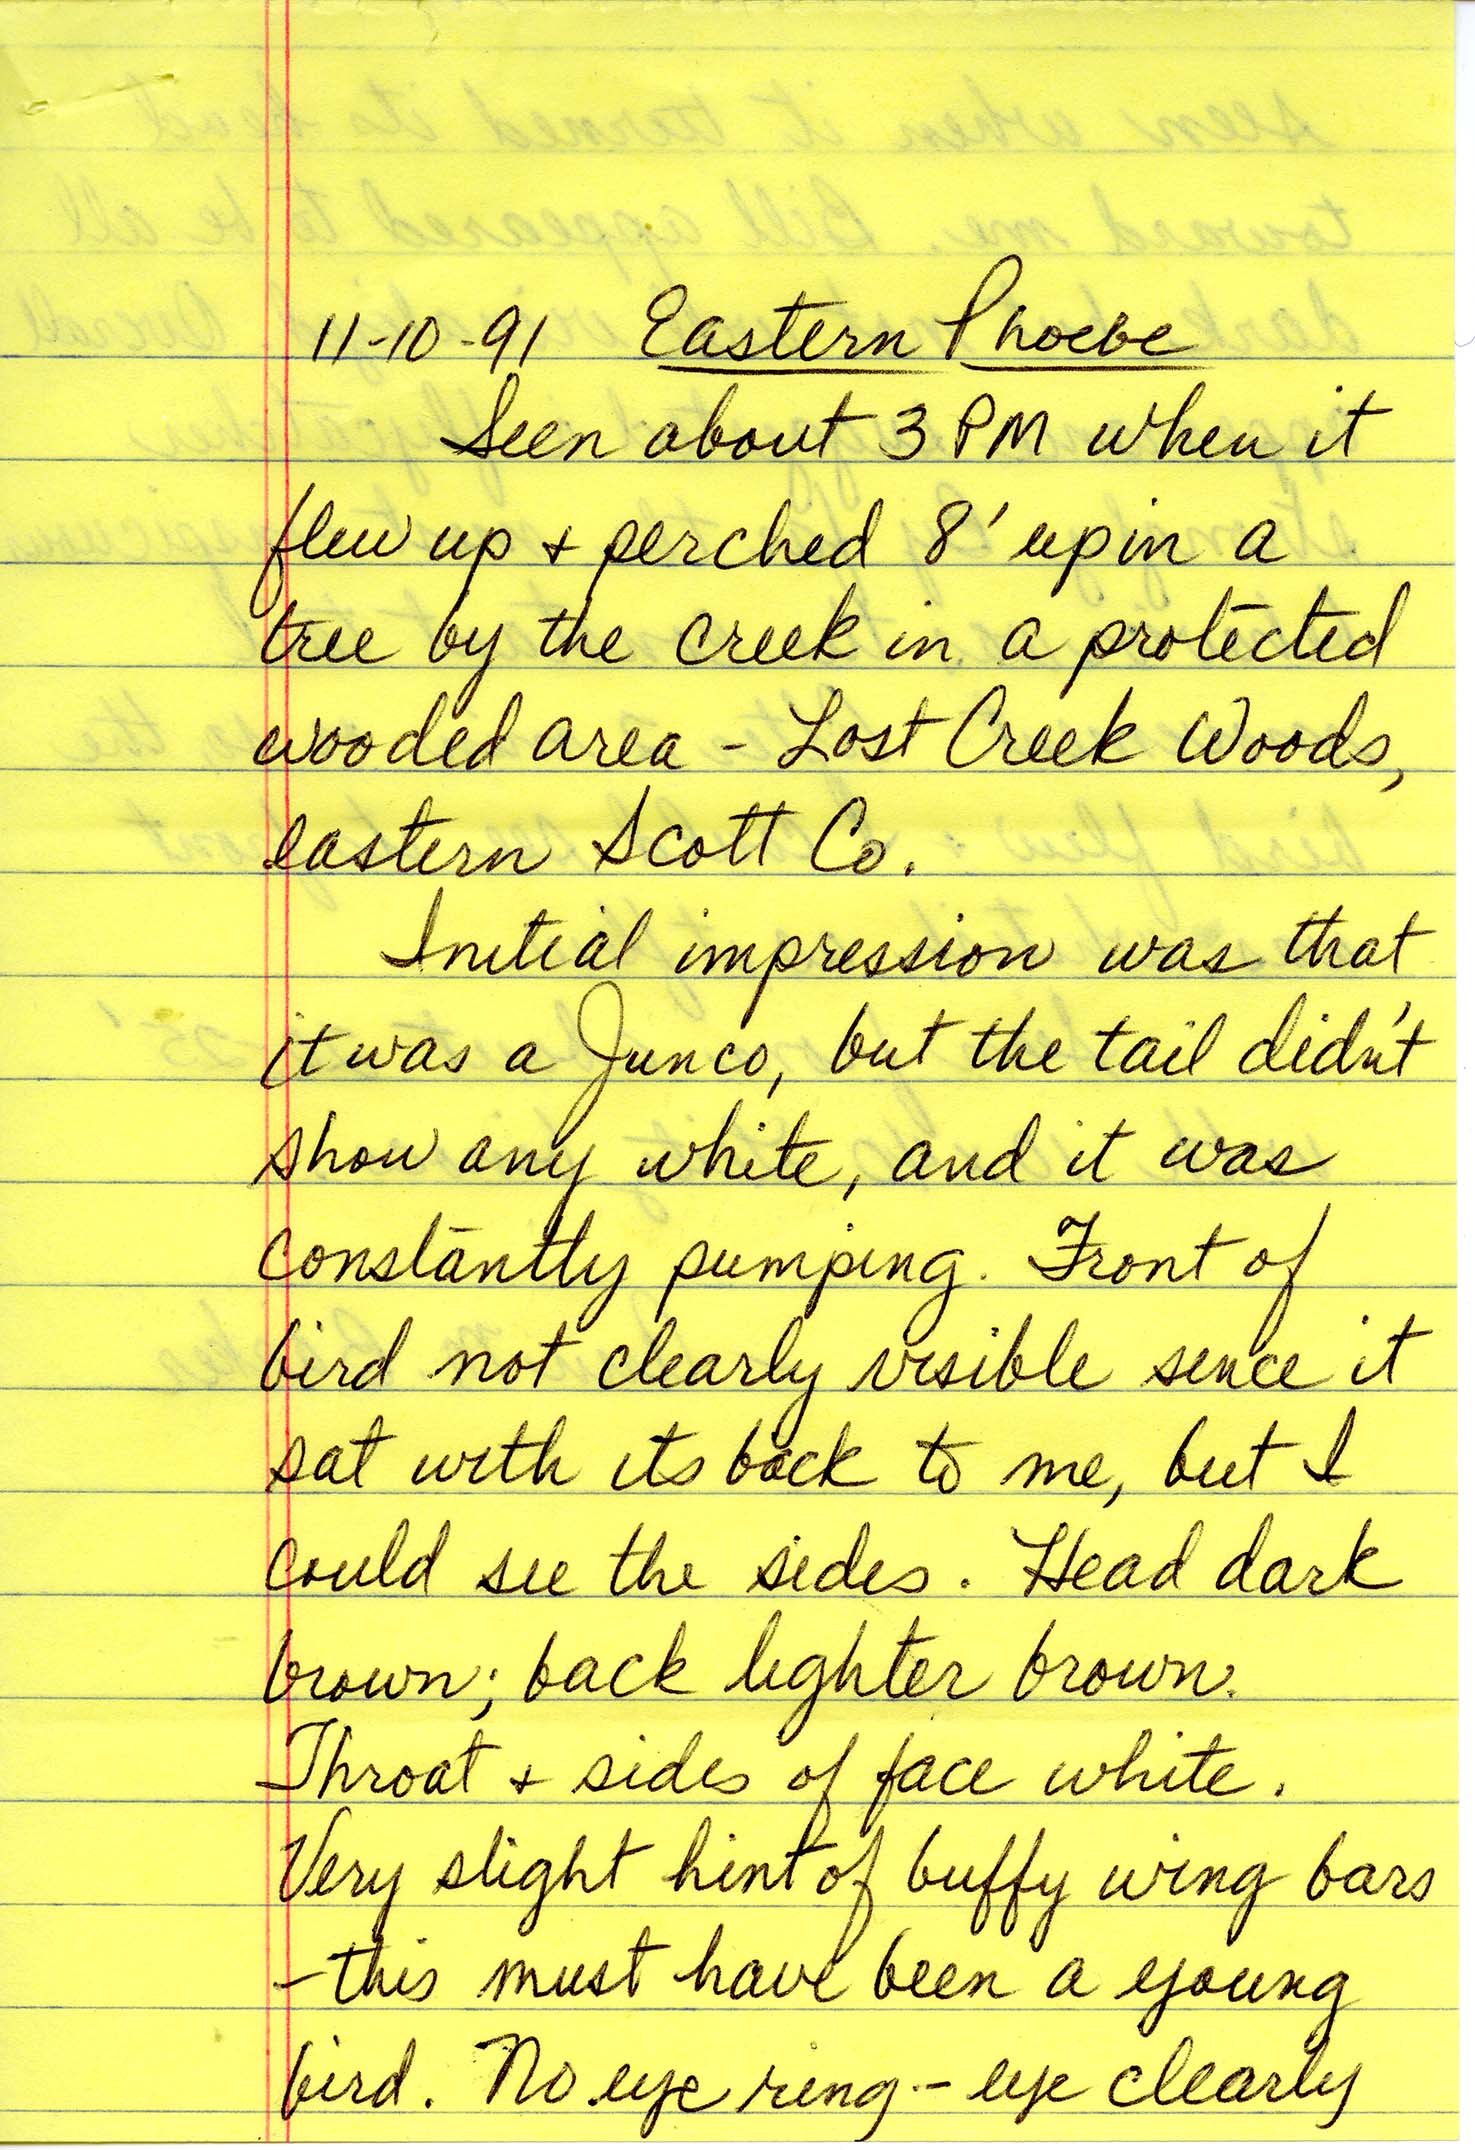 Field notes and Ann M. Barker letter to Thomas H. Kent regarding bird sightings, November 12, 1991